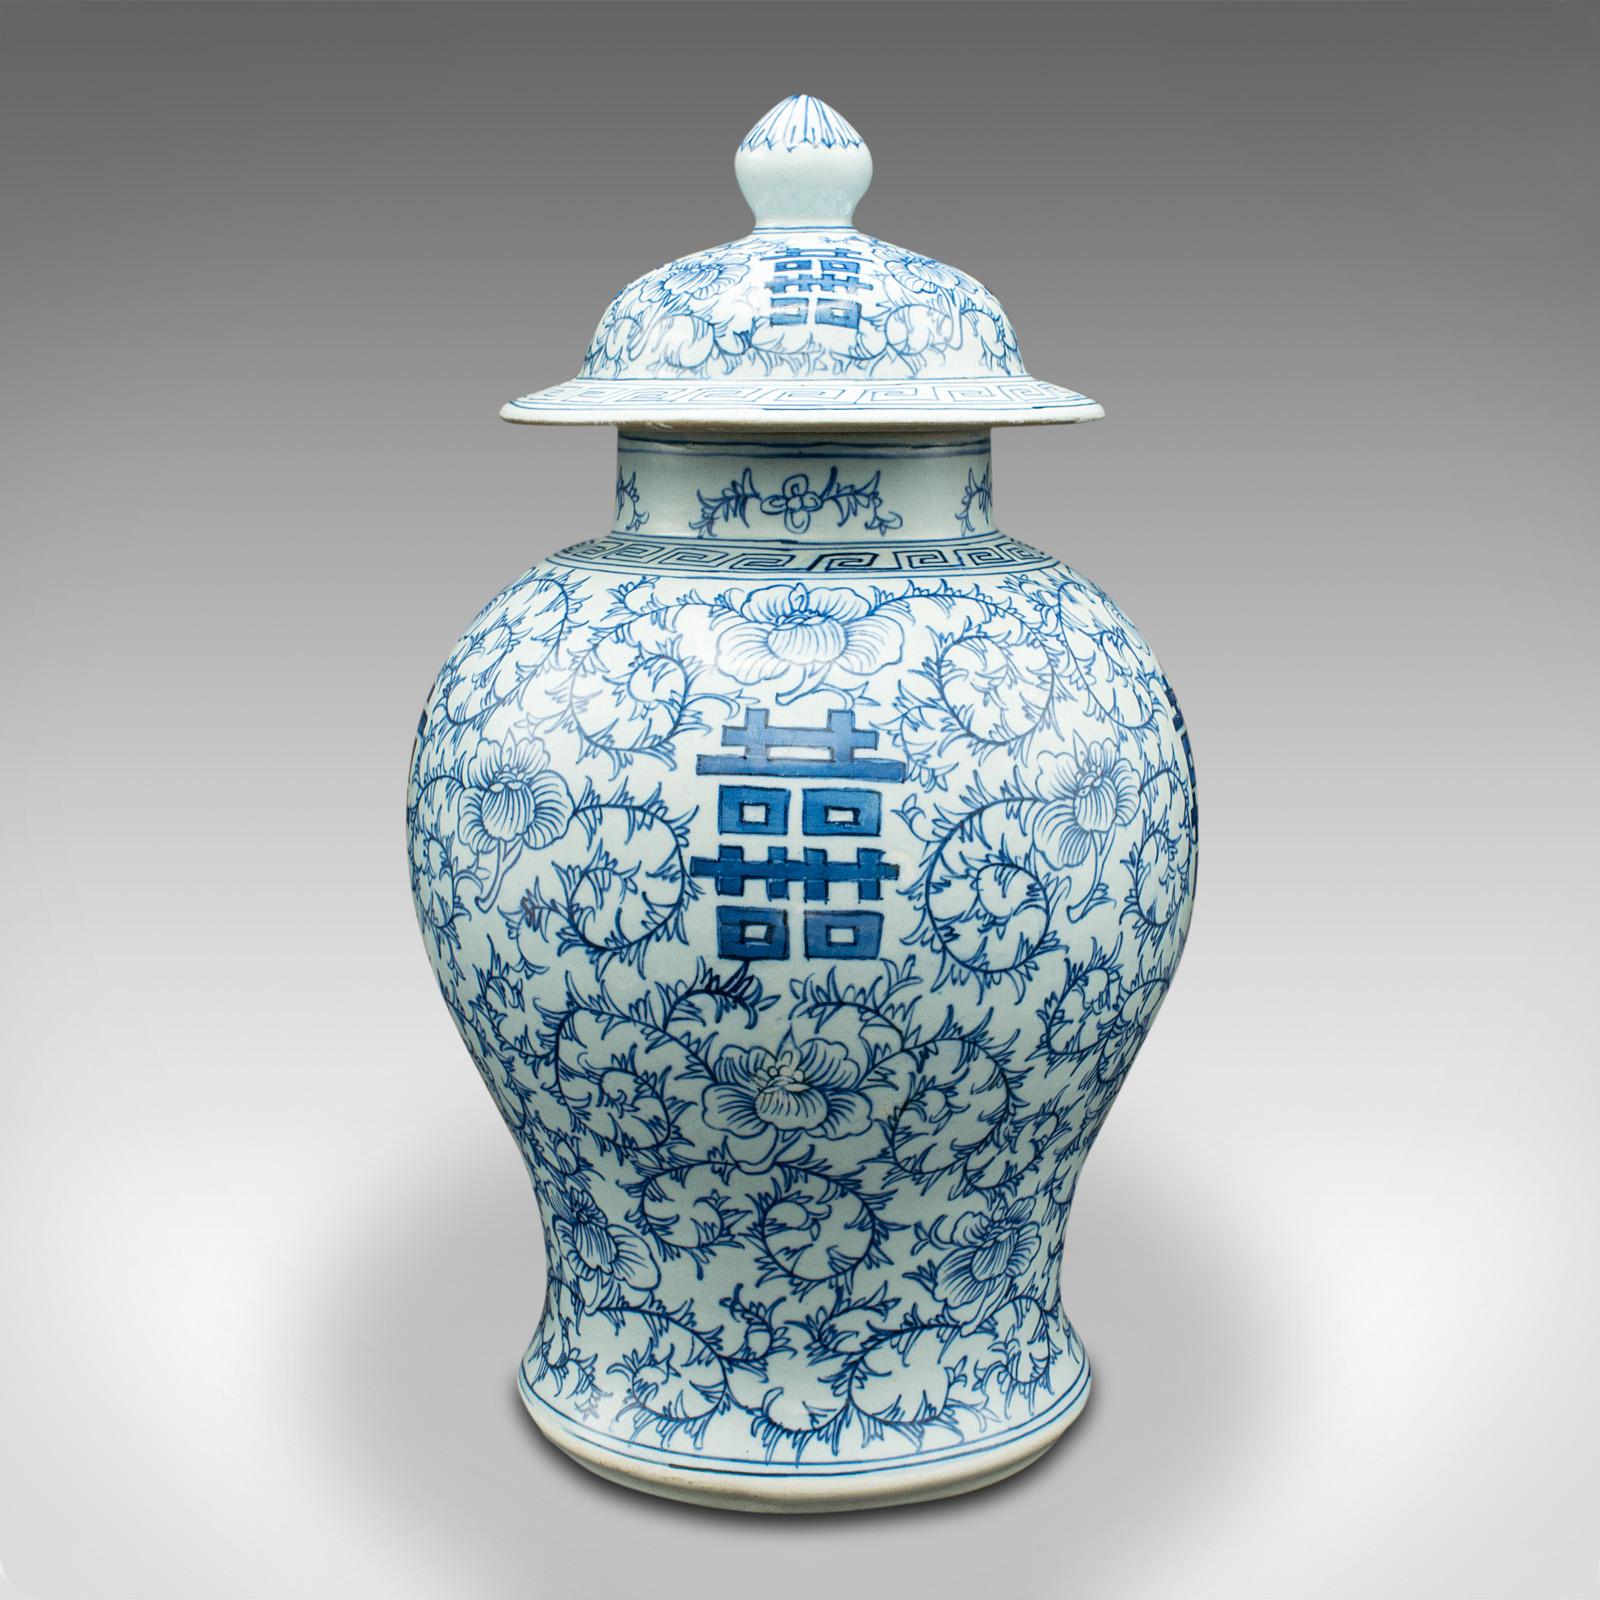 Vintage Decorative Baluster Urn, Chinese, Ceramic, Lidded Vase, Art Deco, C.1930 In Good Condition For Sale In Hele, Devon, GB